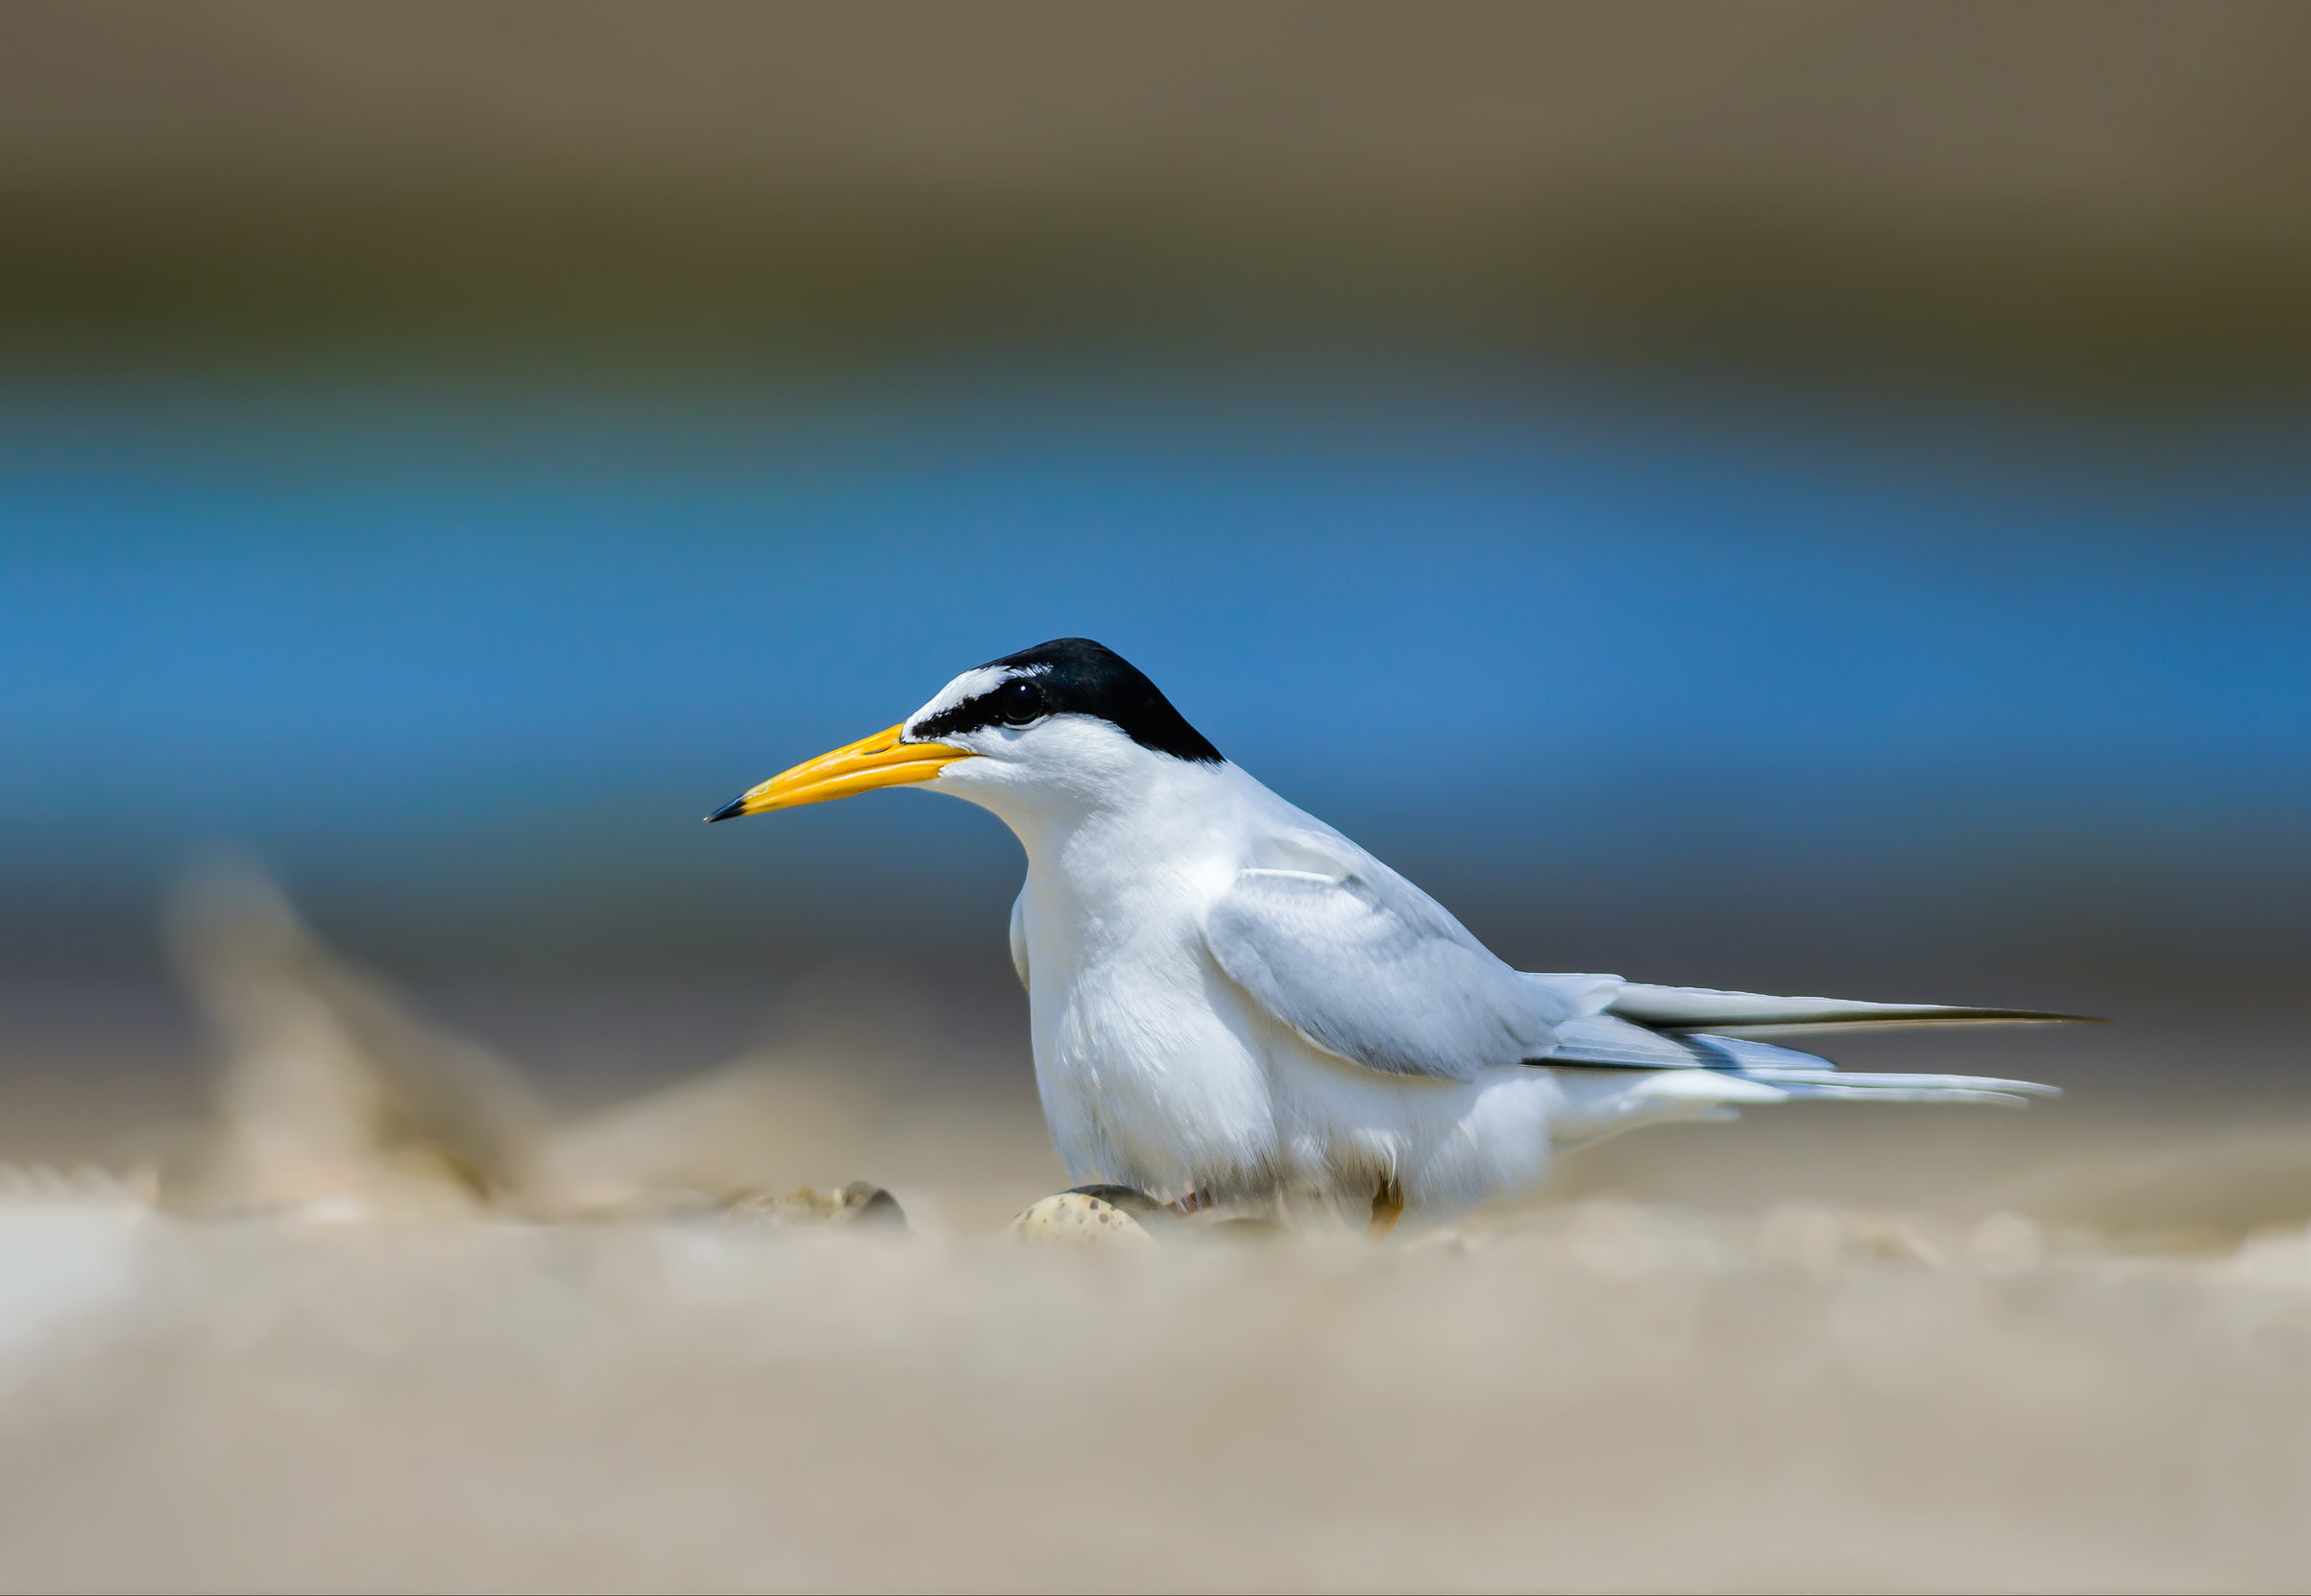 A lone Little Tern sat on their nest on and island beach.